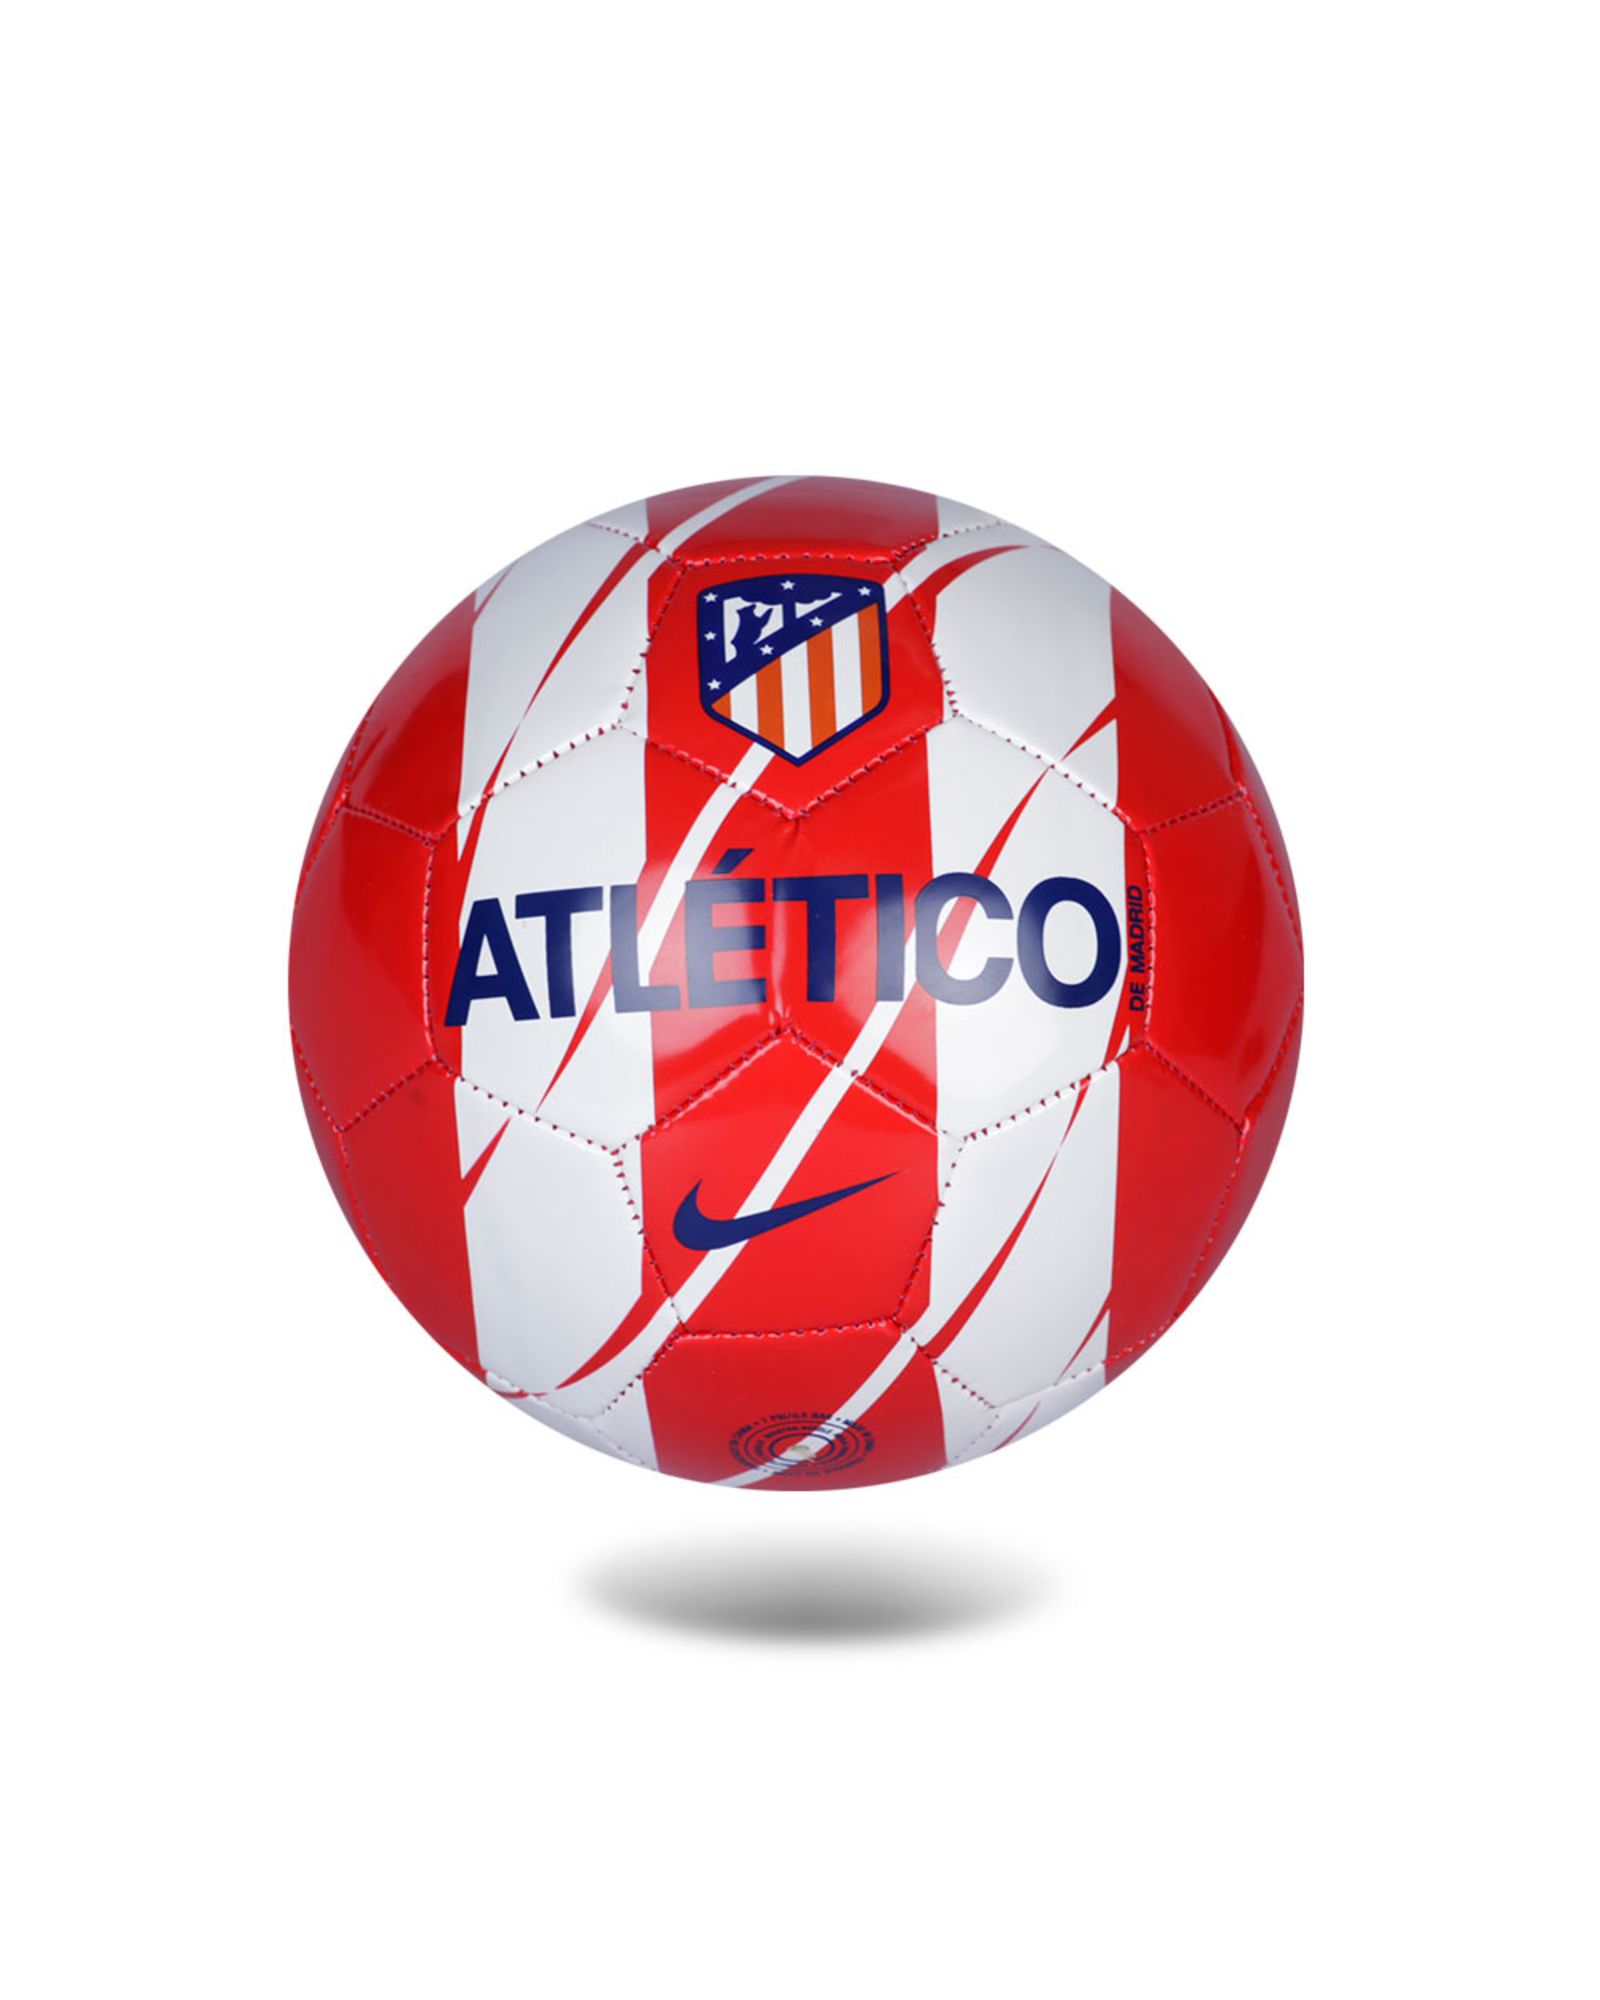 Mini Balón Skills Atlético de Madrid 2017/2018 Rojo Blanco - Fútbol Factory